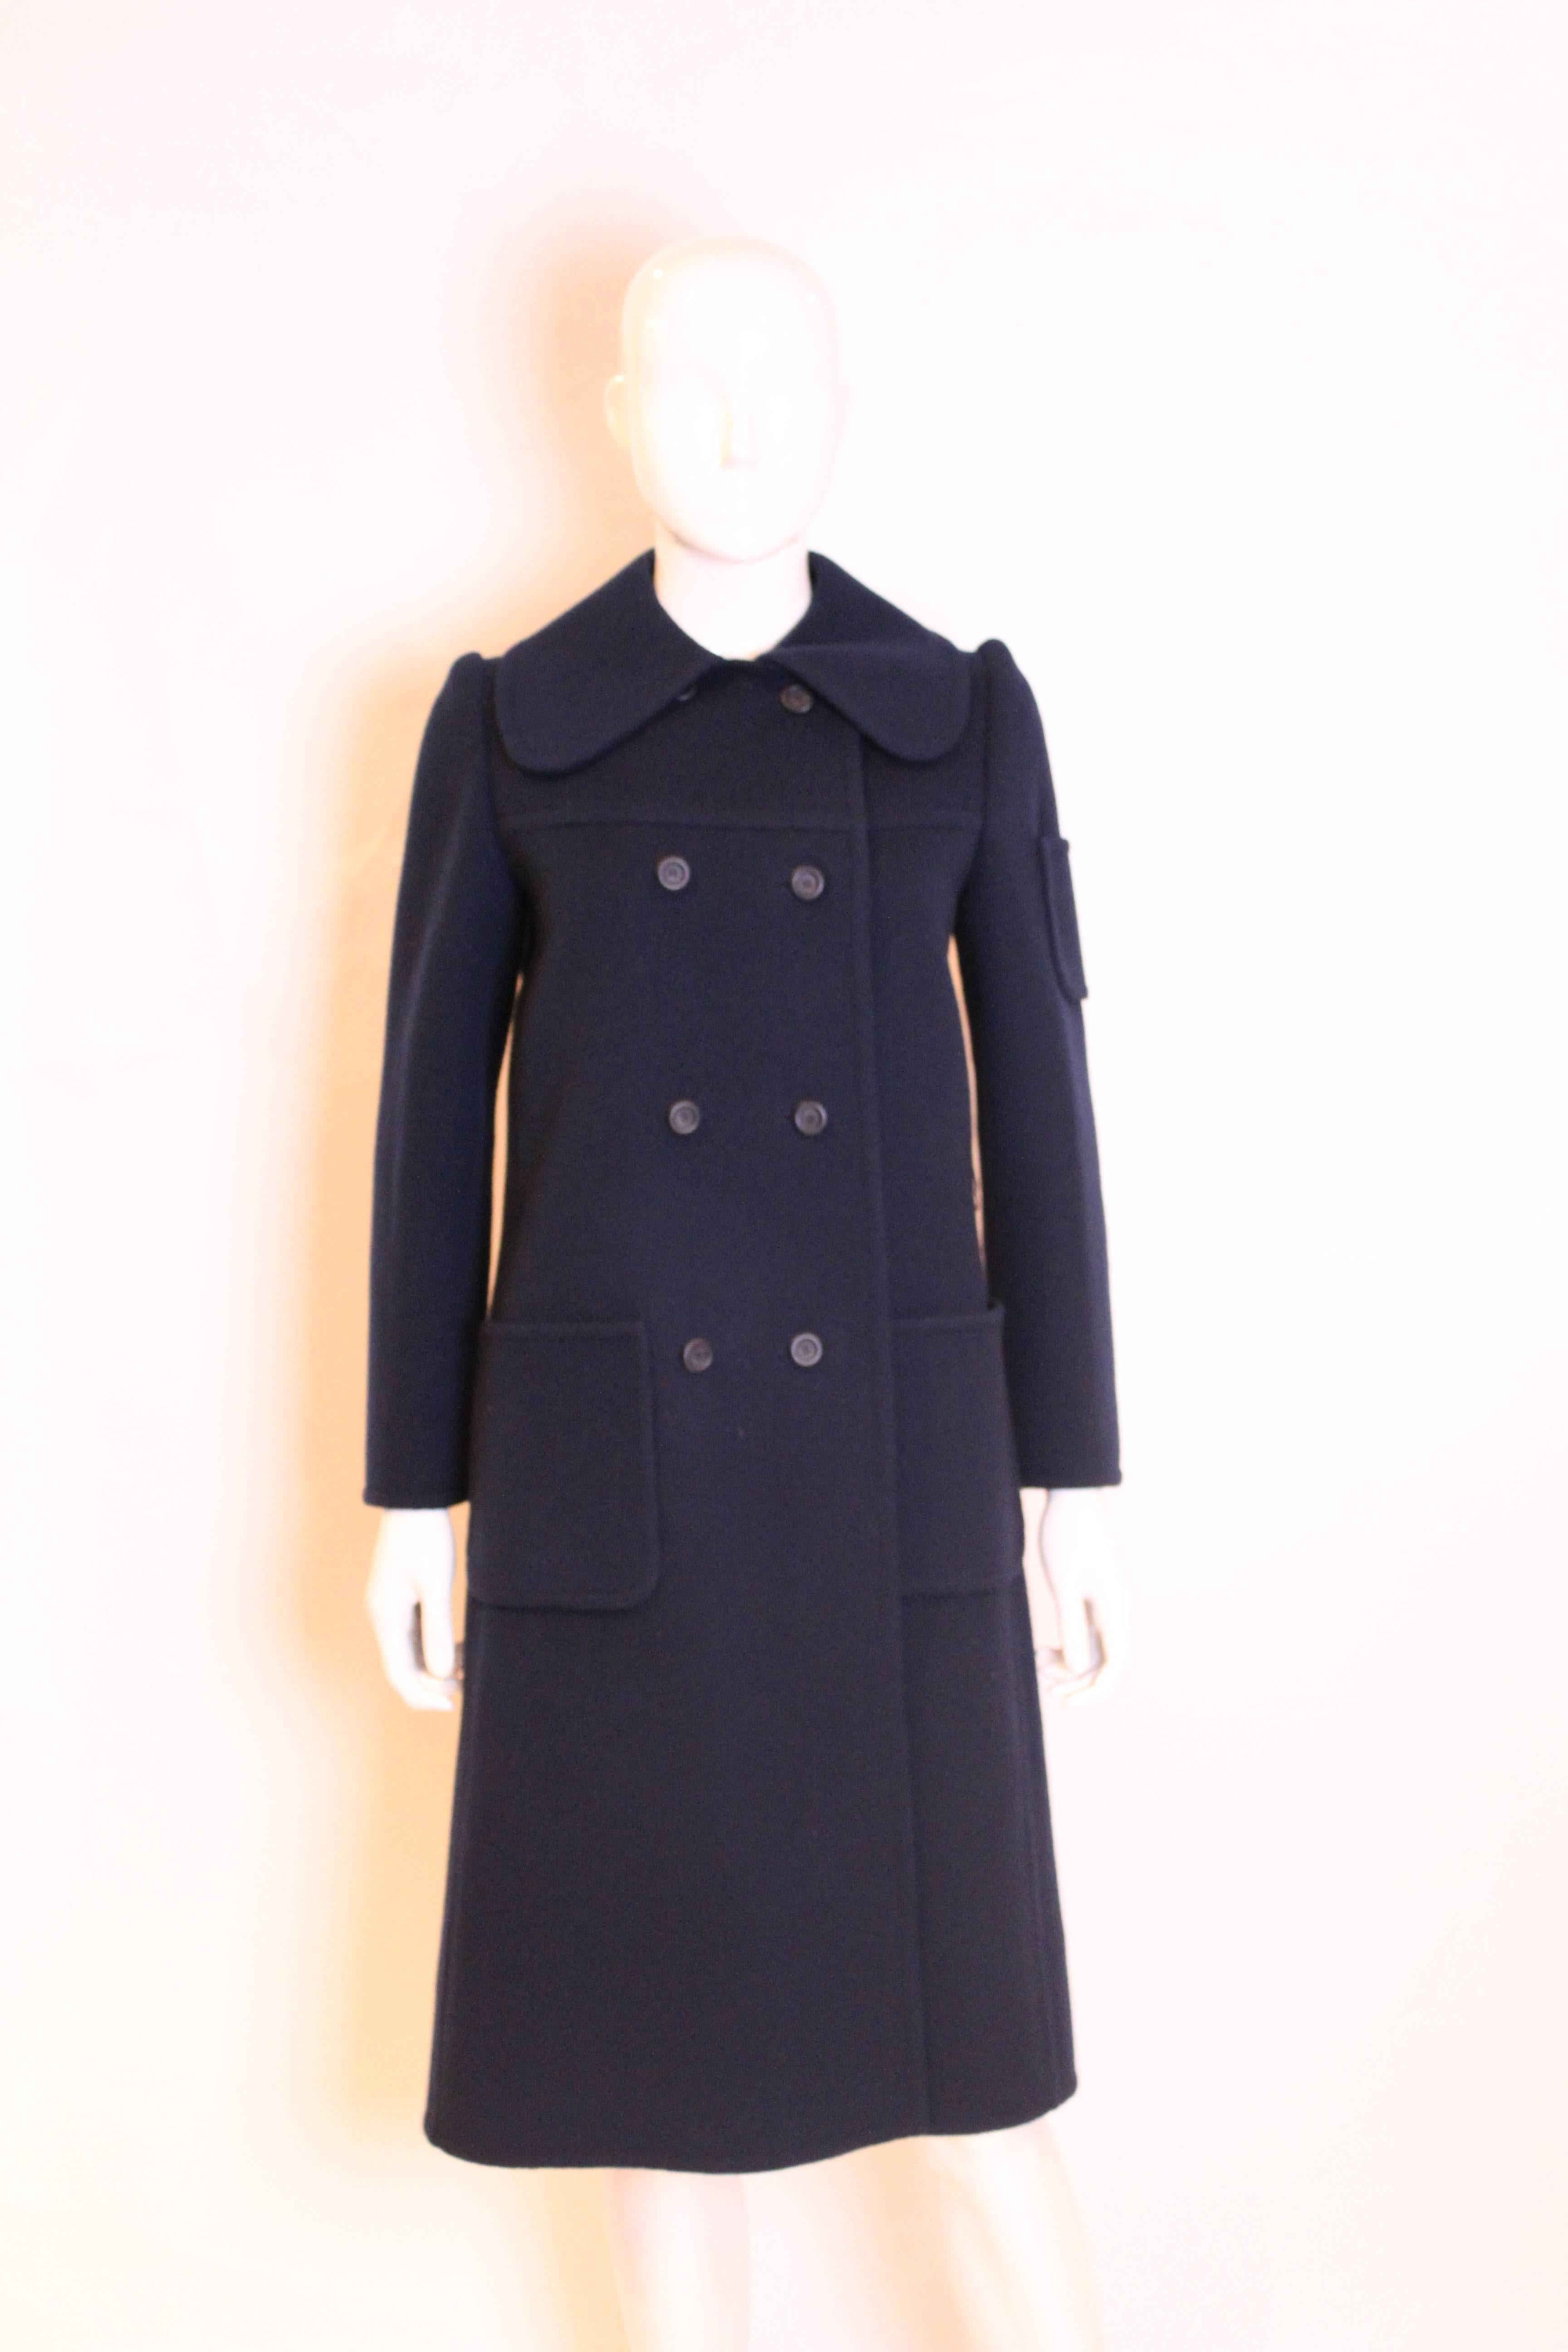 Christian Dior Paris, Blue Wool Coat, Patron Original number 00200 2